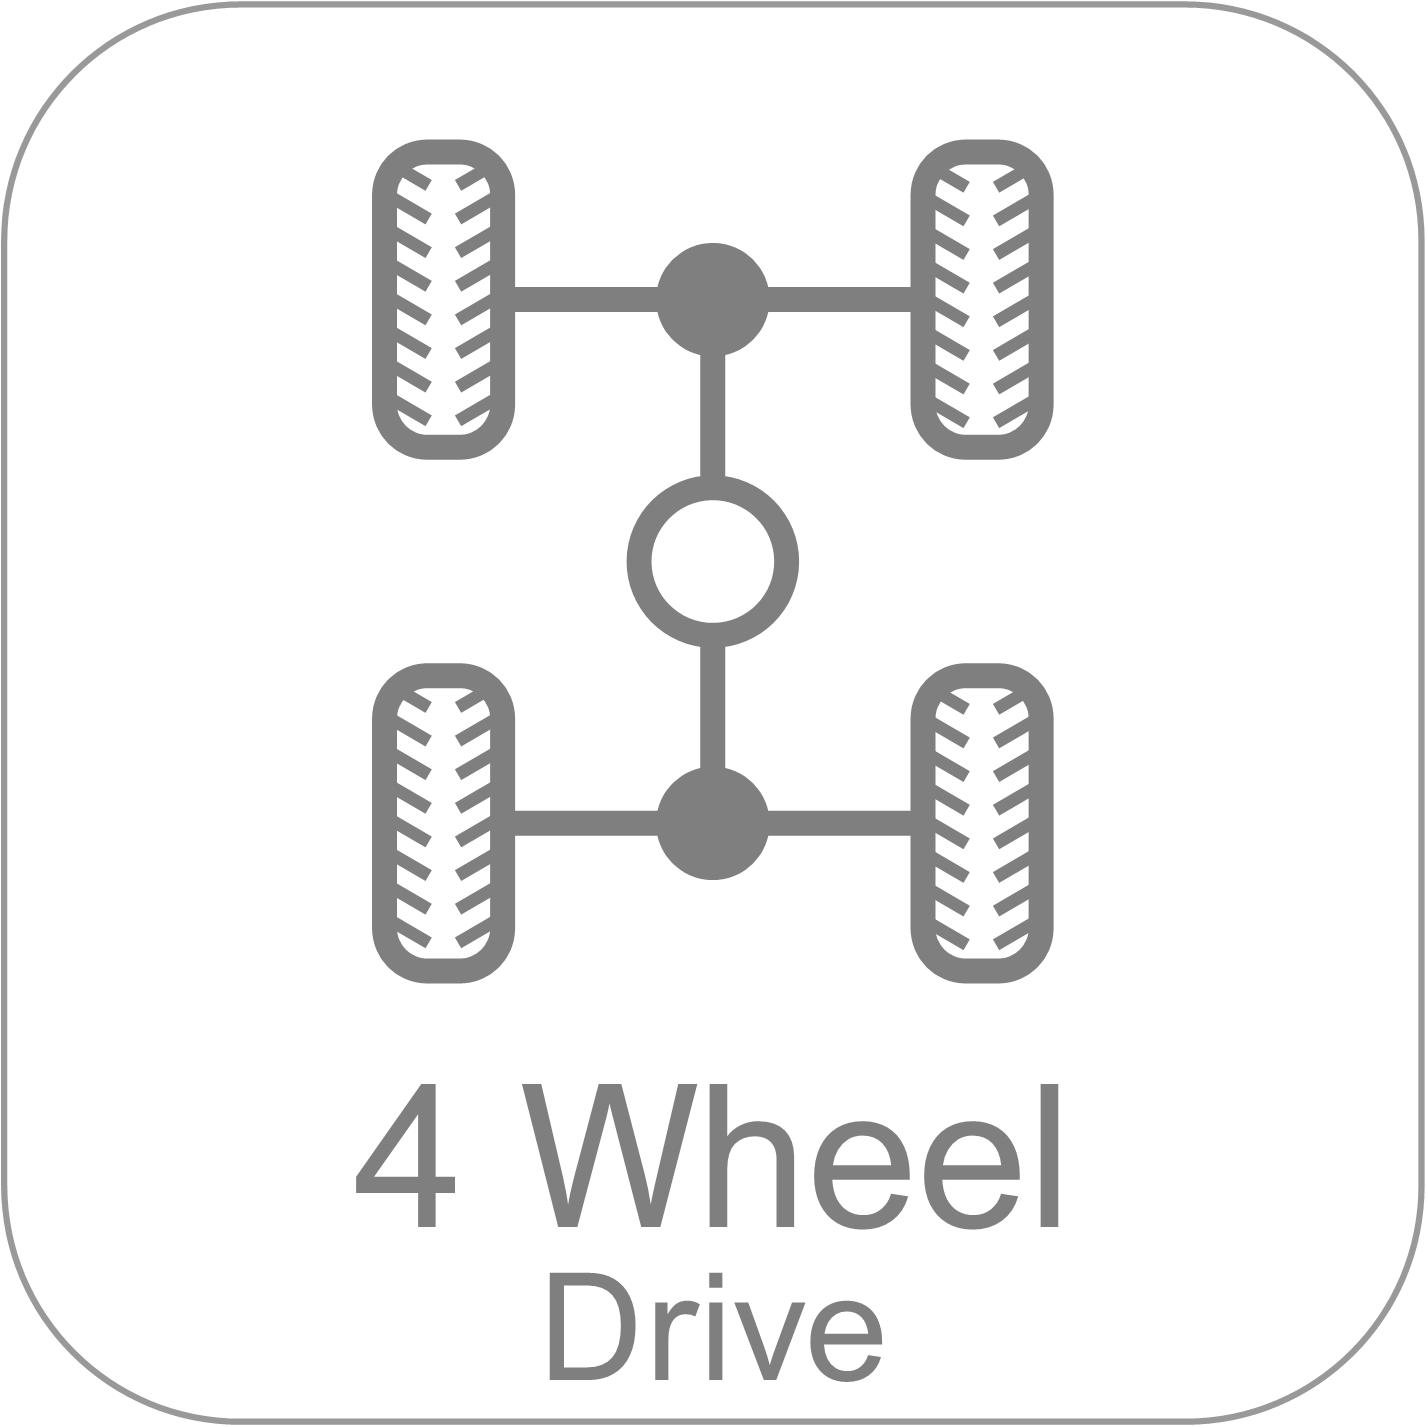 Volquetes Serie DM - 4 Wheel Drive